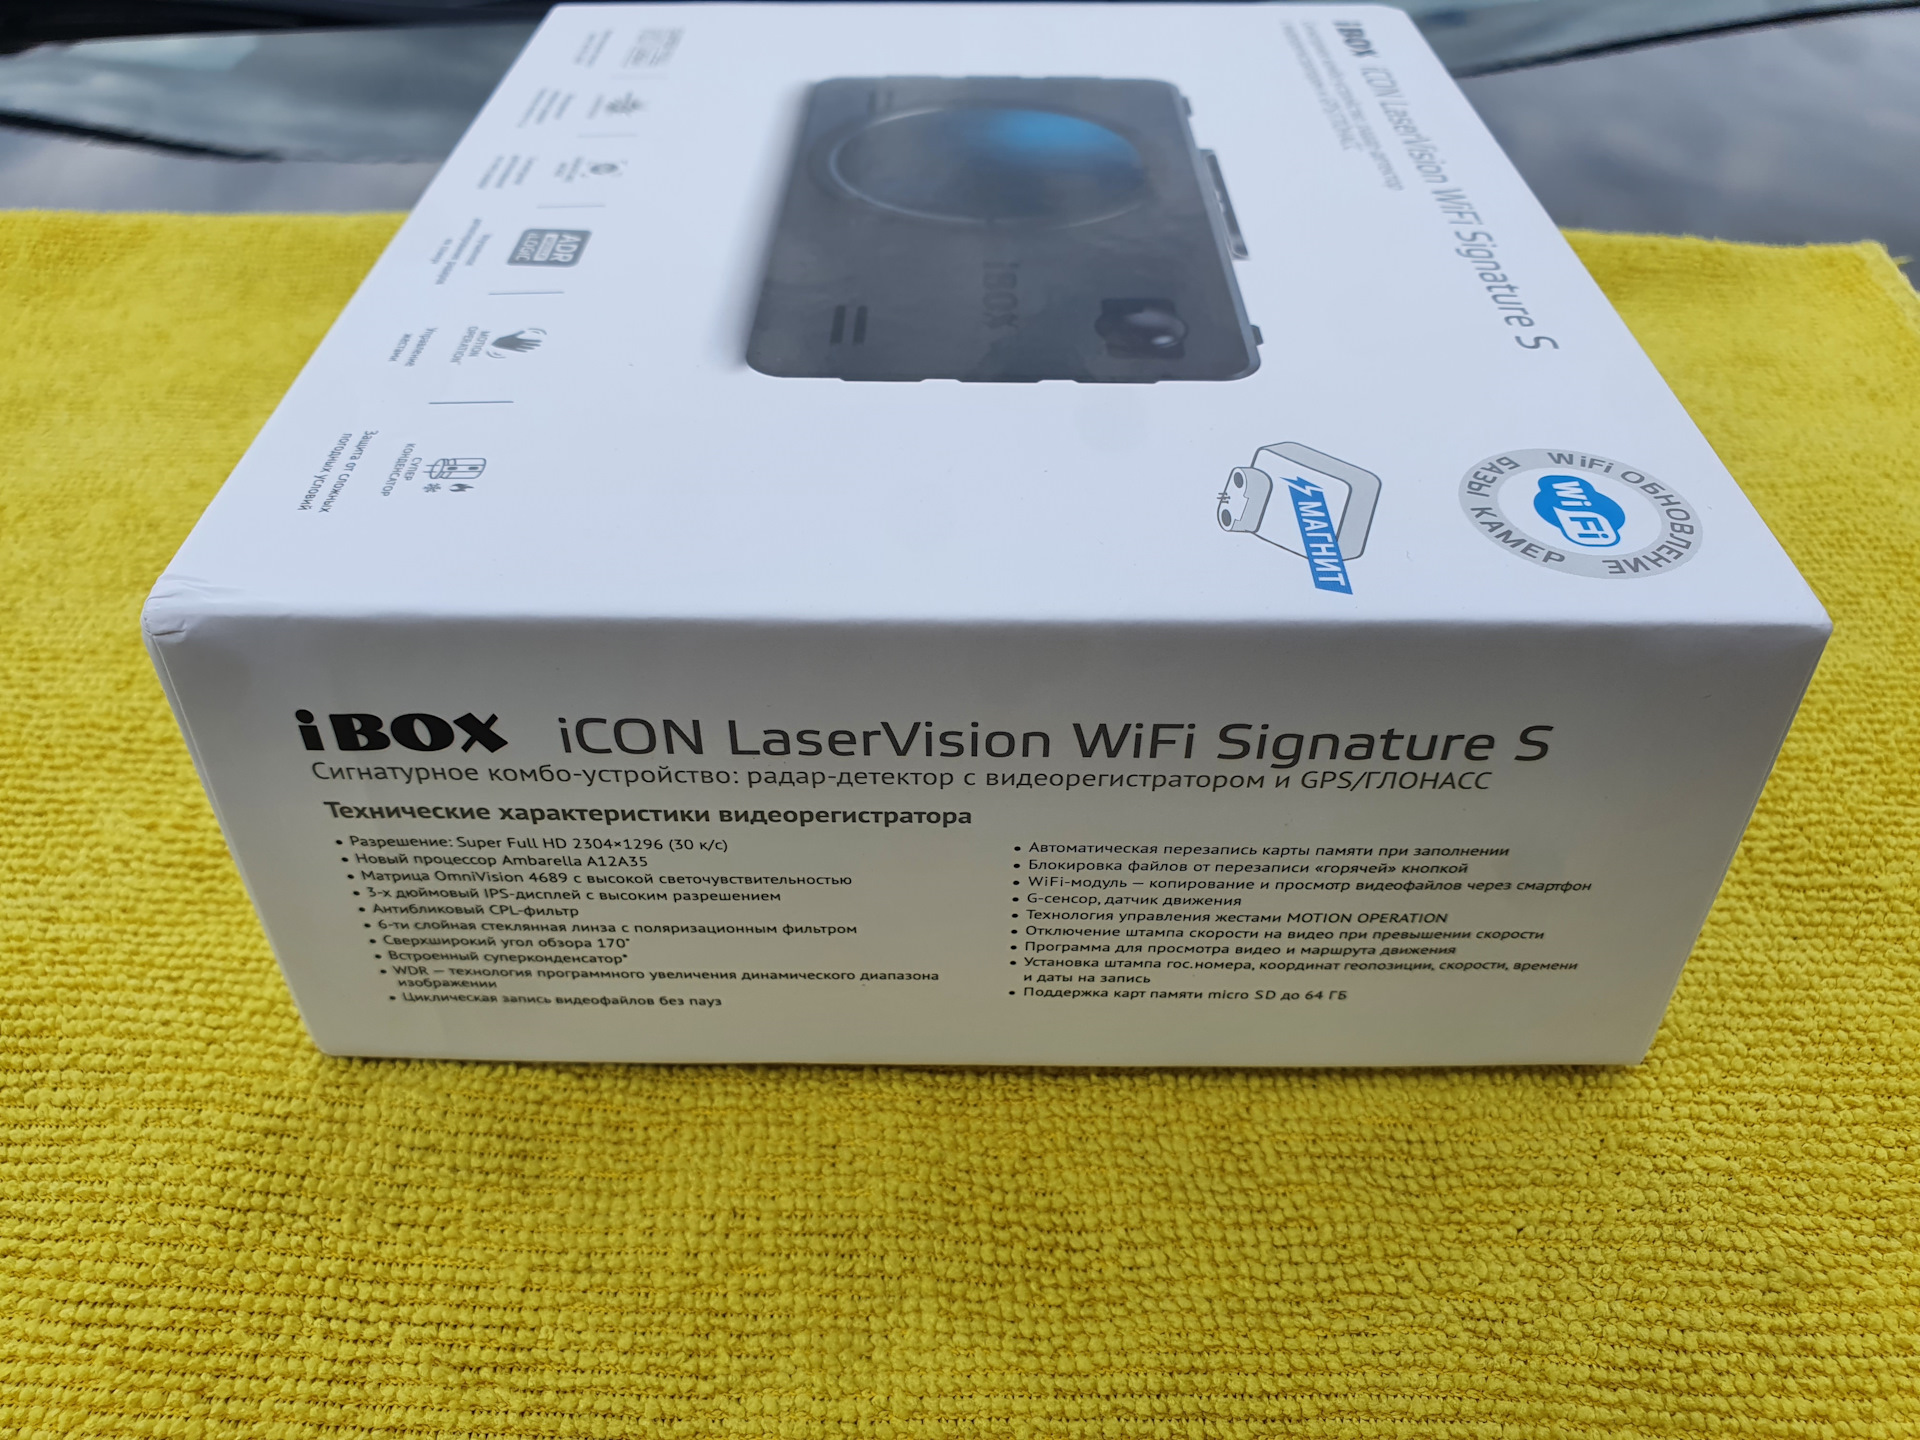 Ibox icon wifi купить. IBOX icon Laser Vision WIFI Signature Dual. IBOX Laser Vision WIFI Signature s. IBOX icon laservision WIFI Signature. IBOX one Laser Vision Wi Fi Signature.